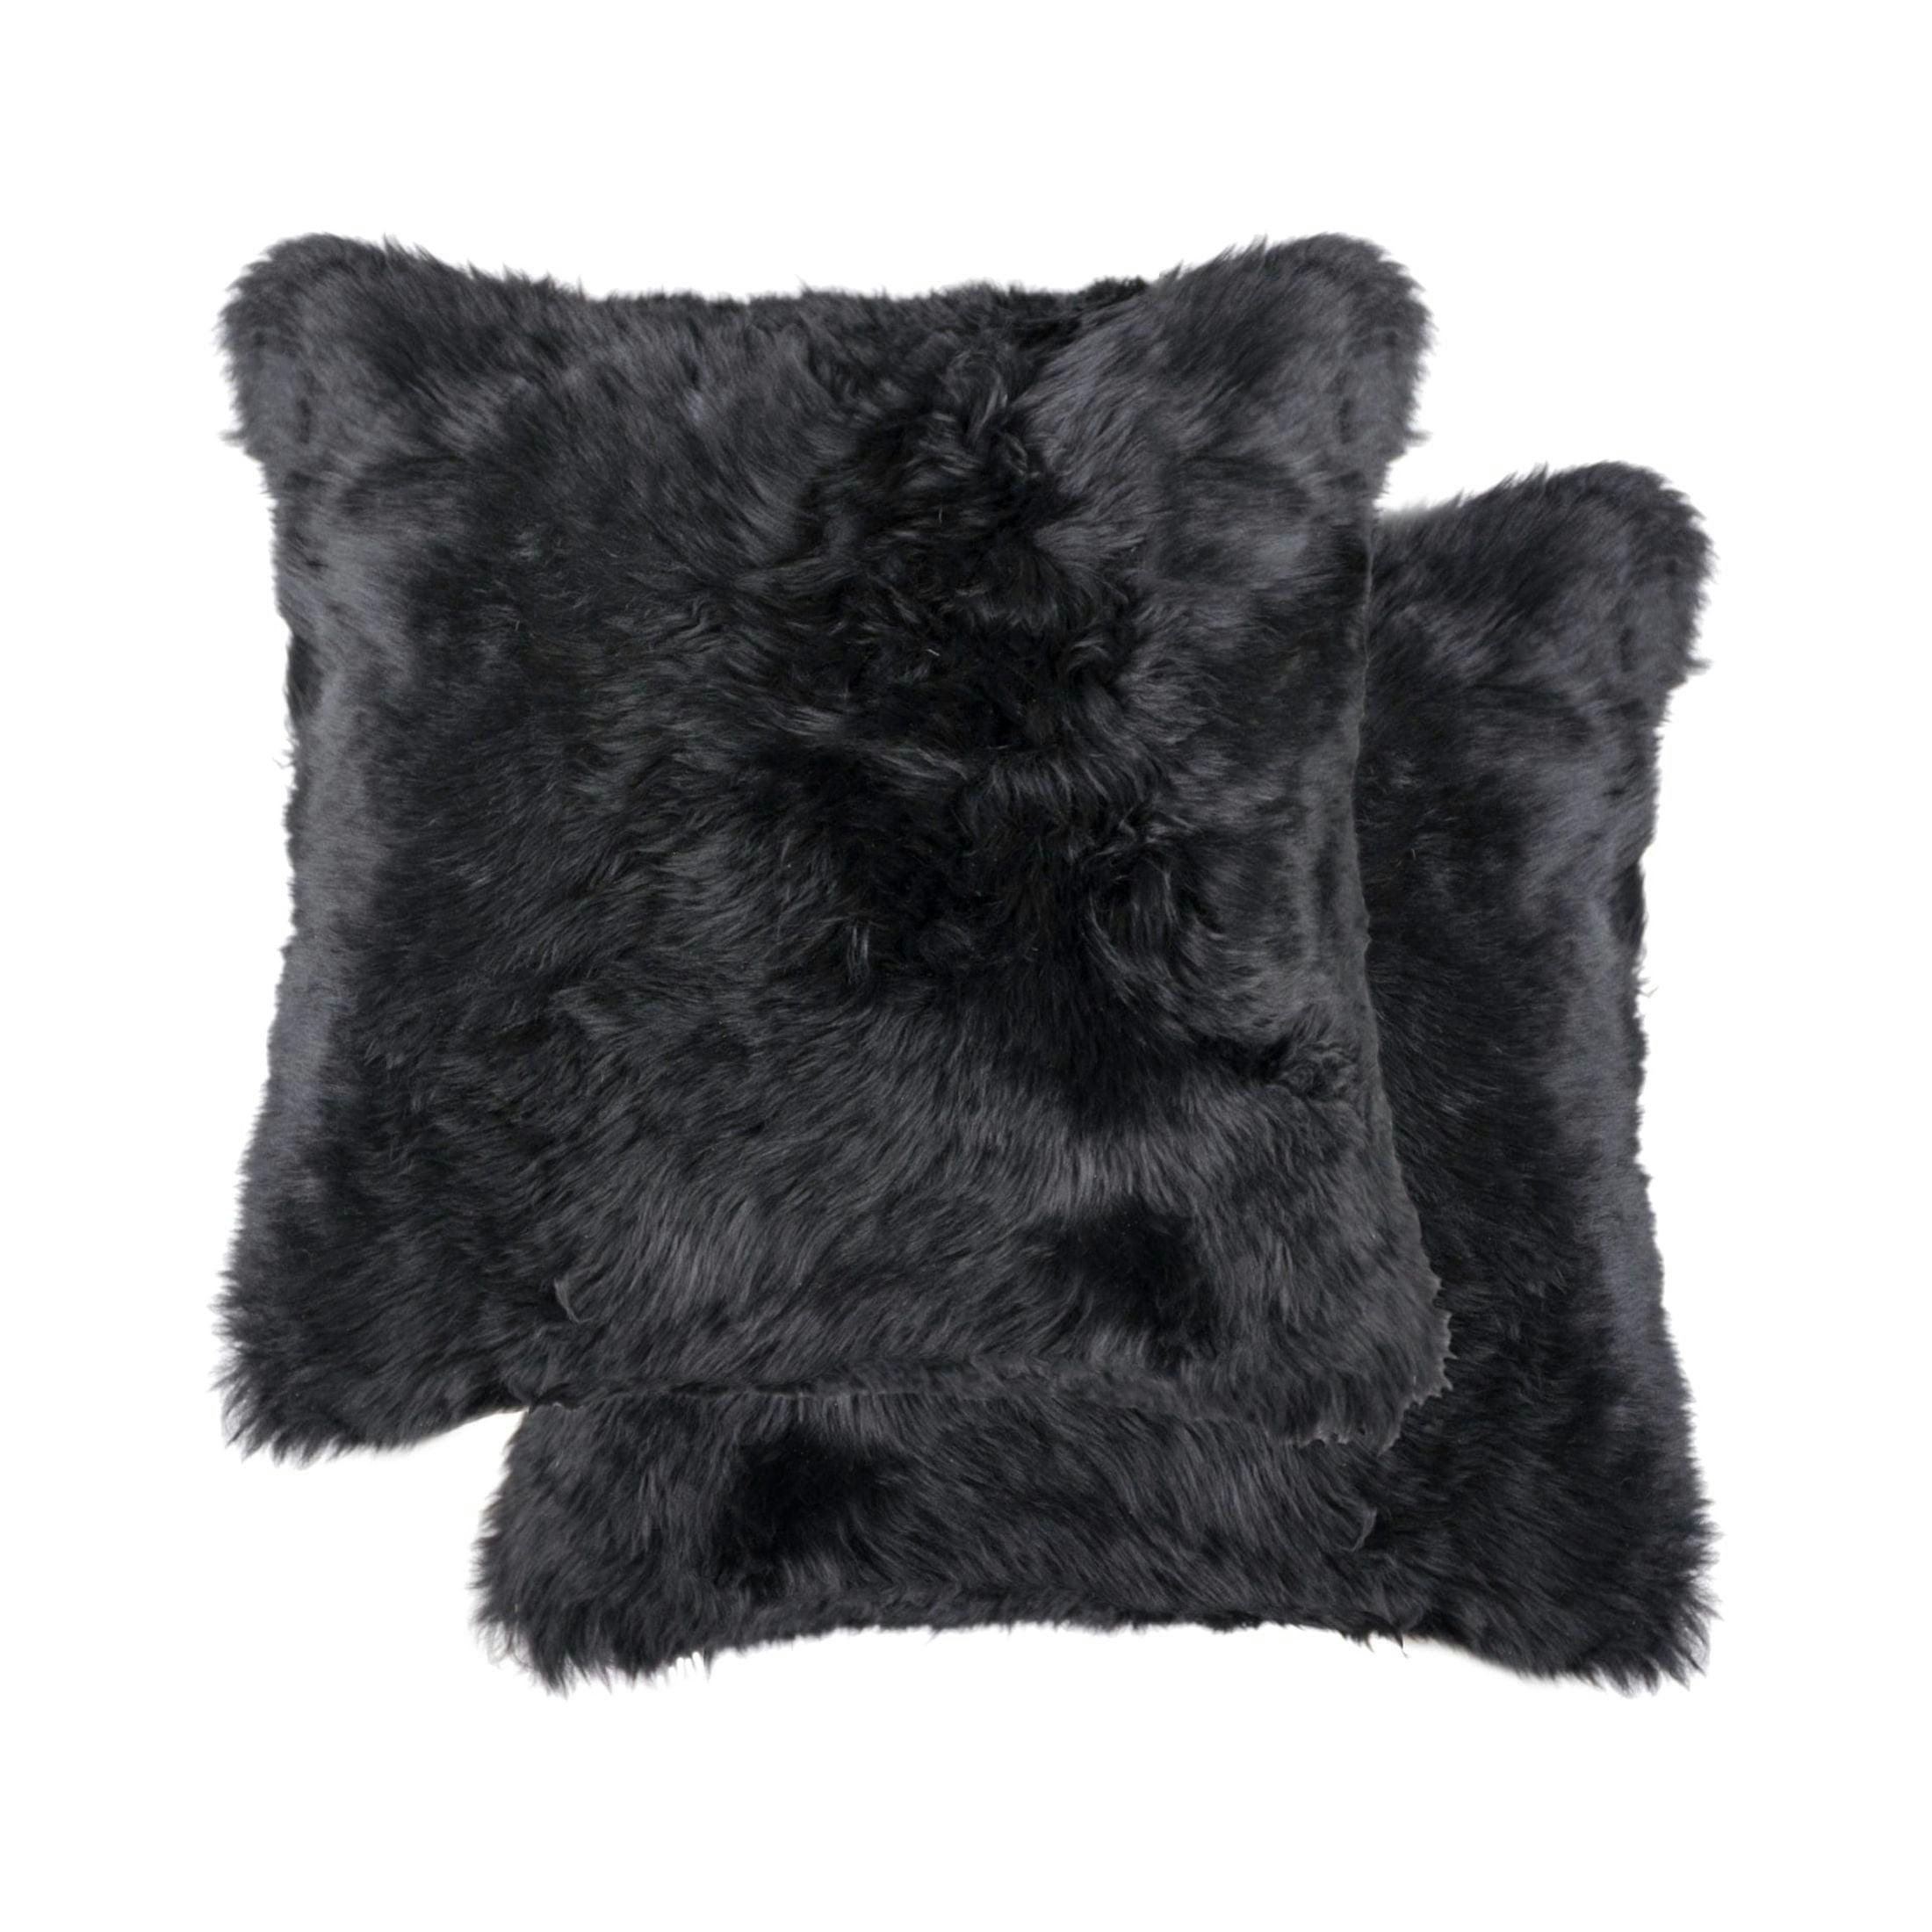 Luxurious New Zealand Sheepskin Square Pillow Set - Black 18"x18"